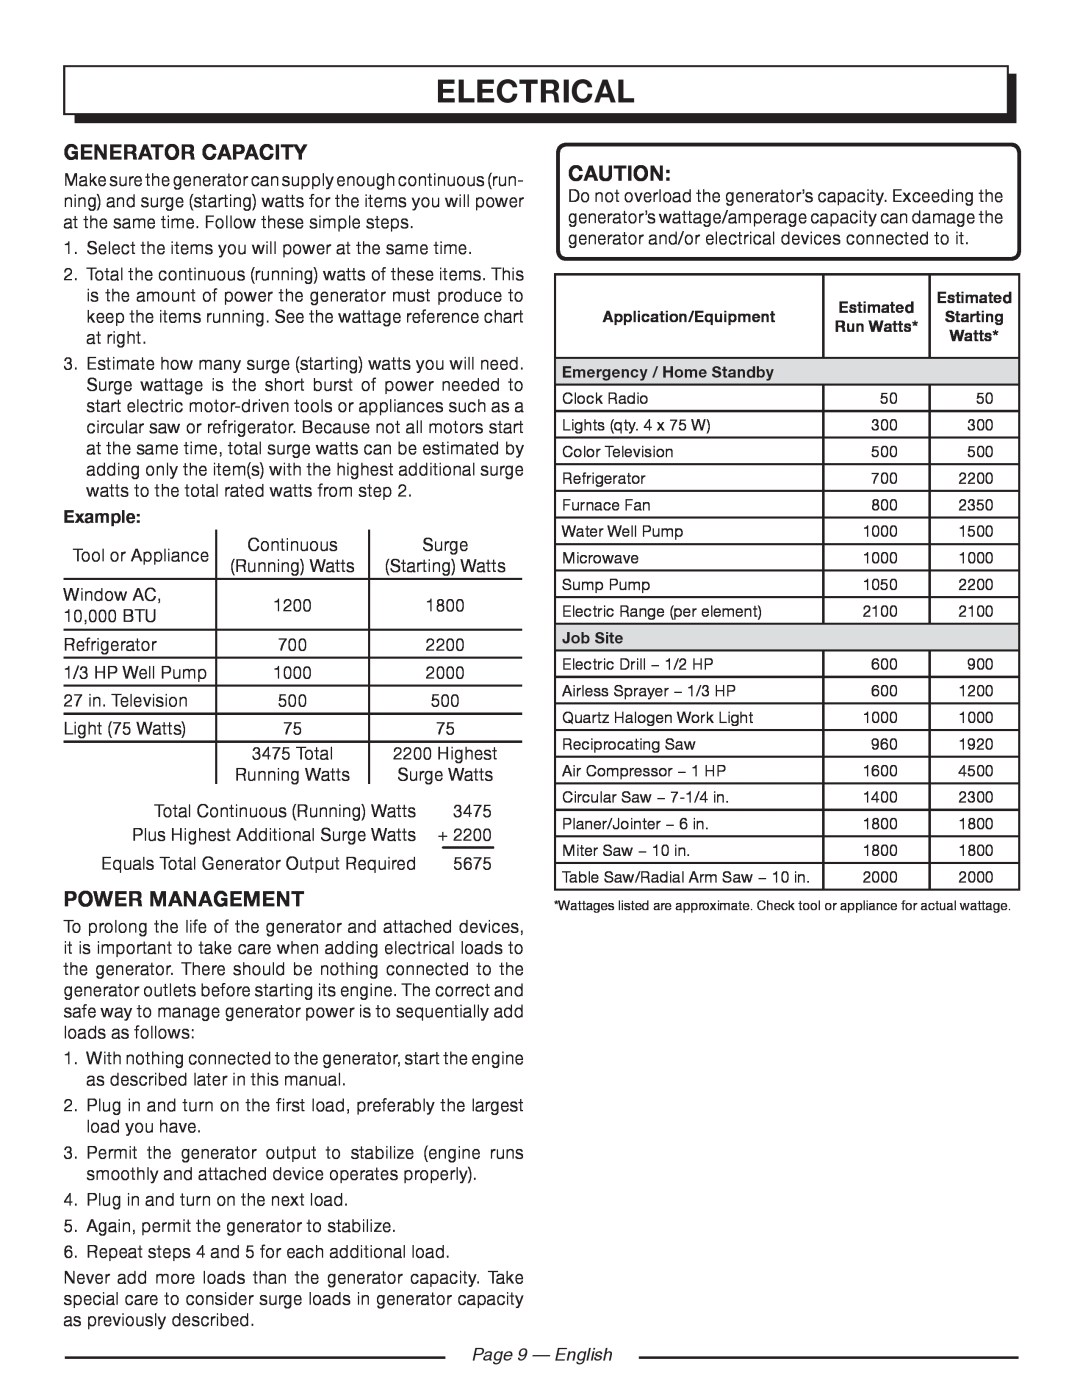 Homelite HGCA1400 manuel dutilisation electrical, generator Capacity, Power Management, Example, Page 9 - English 